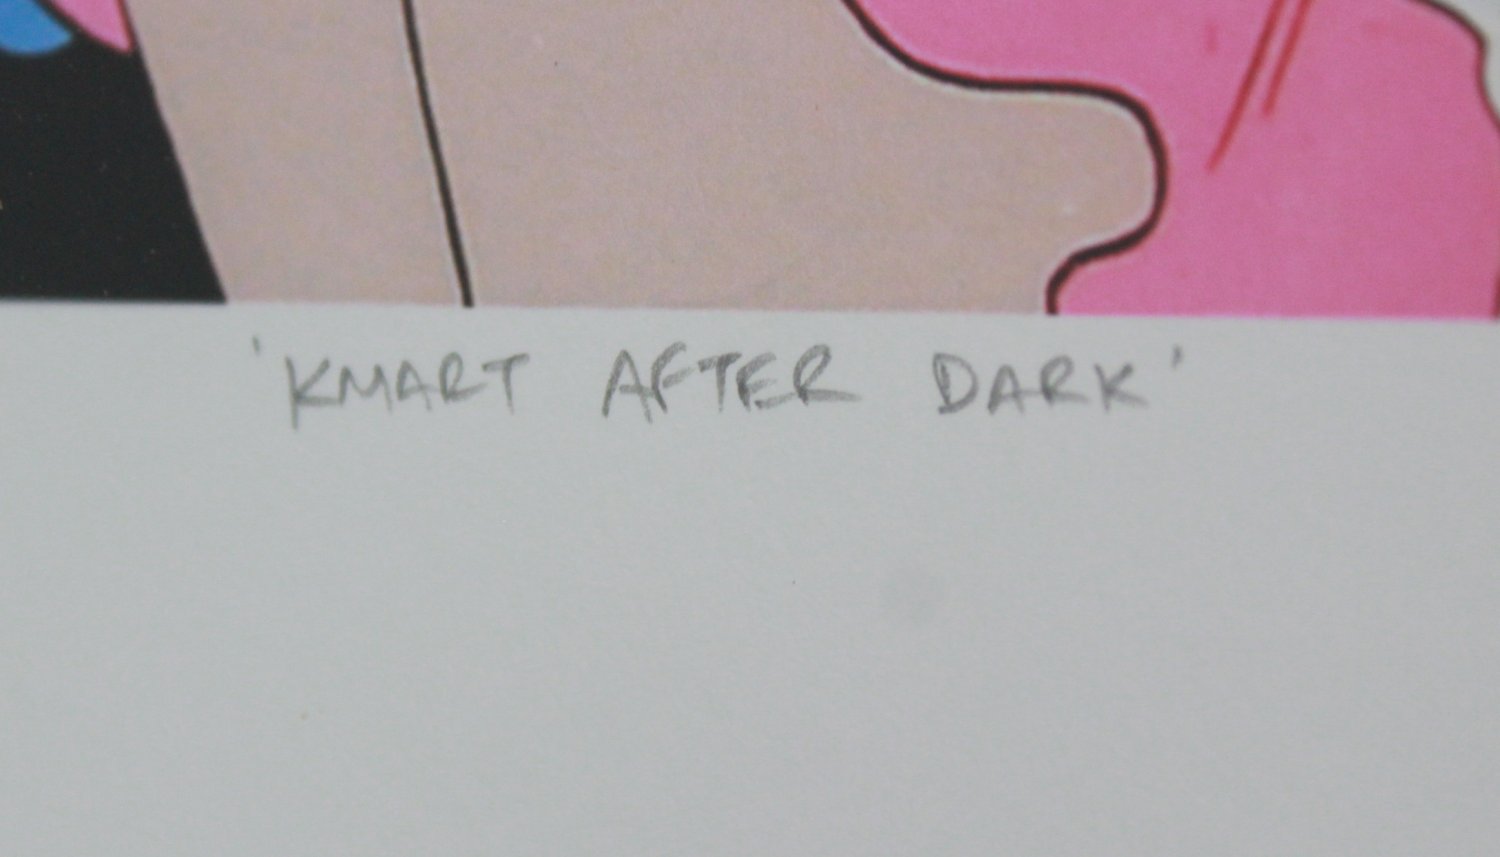 Ben Frost, "Kmart After Dark" & Psycho Poster - Image 6 of 7